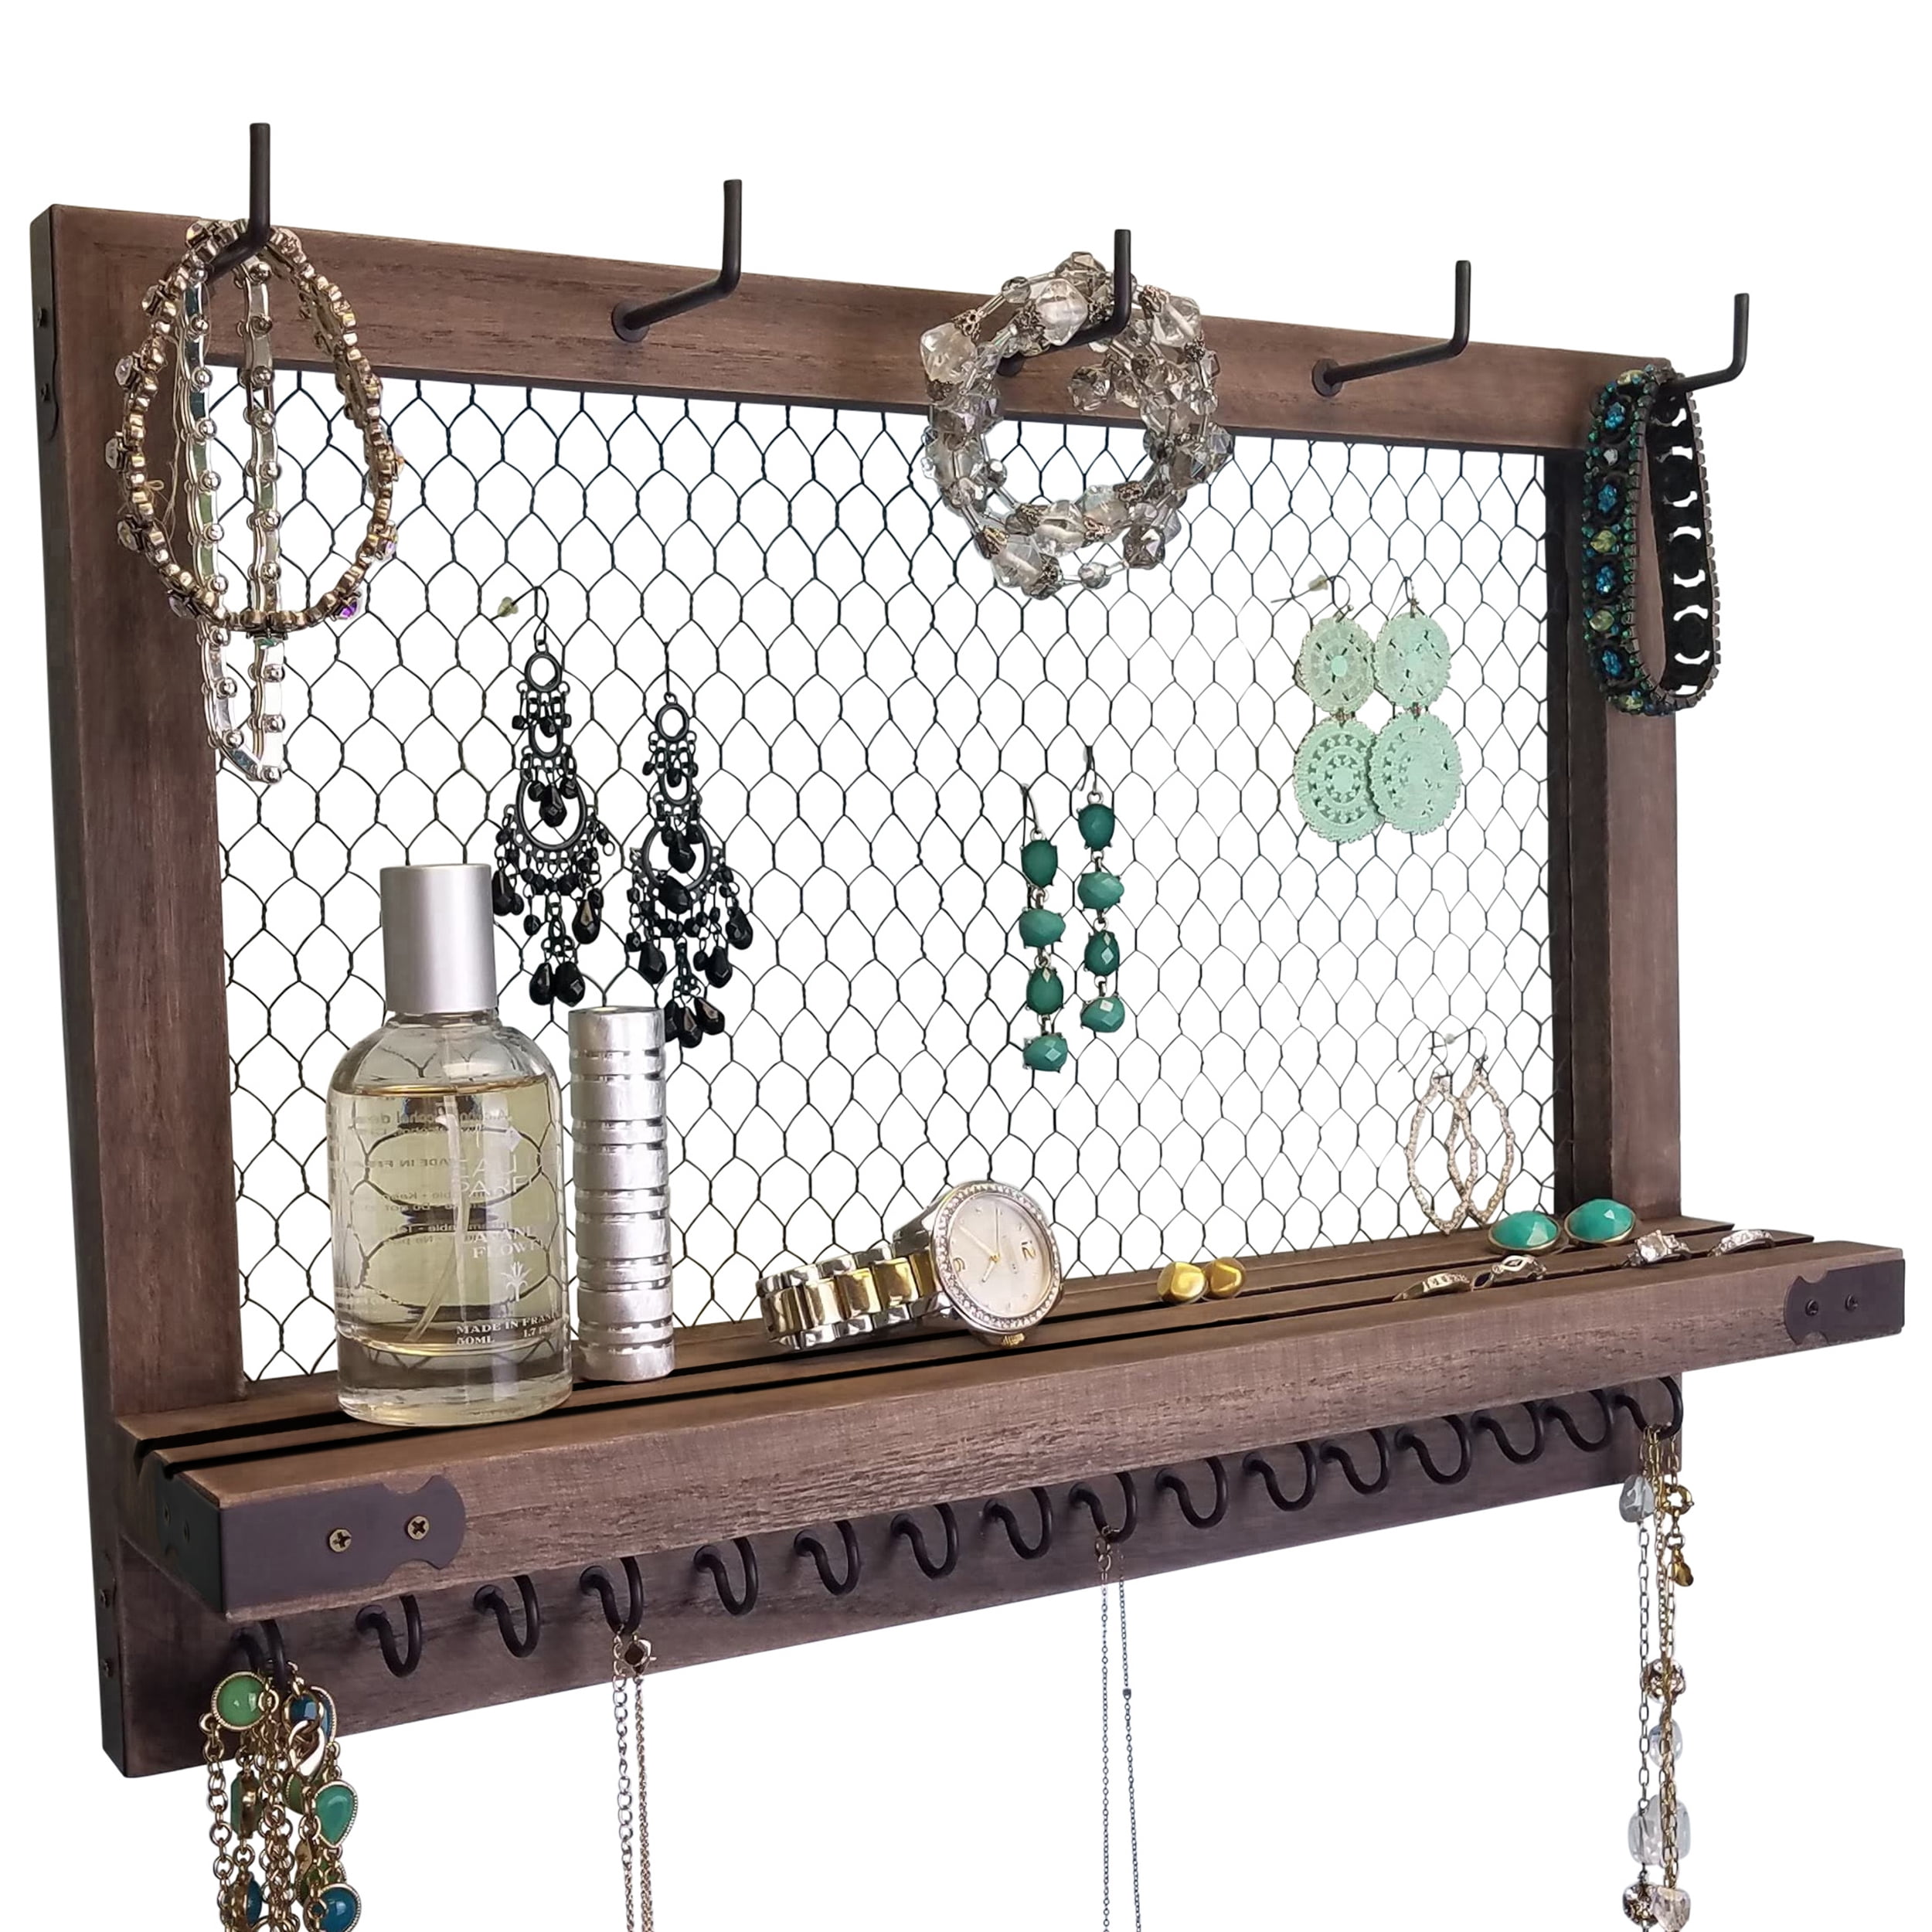 Wall Control Jewelry Organizer Wall Hanging Jewelry Holder Necklace Rack – Black Wall Mounted Jewelry Organizer System